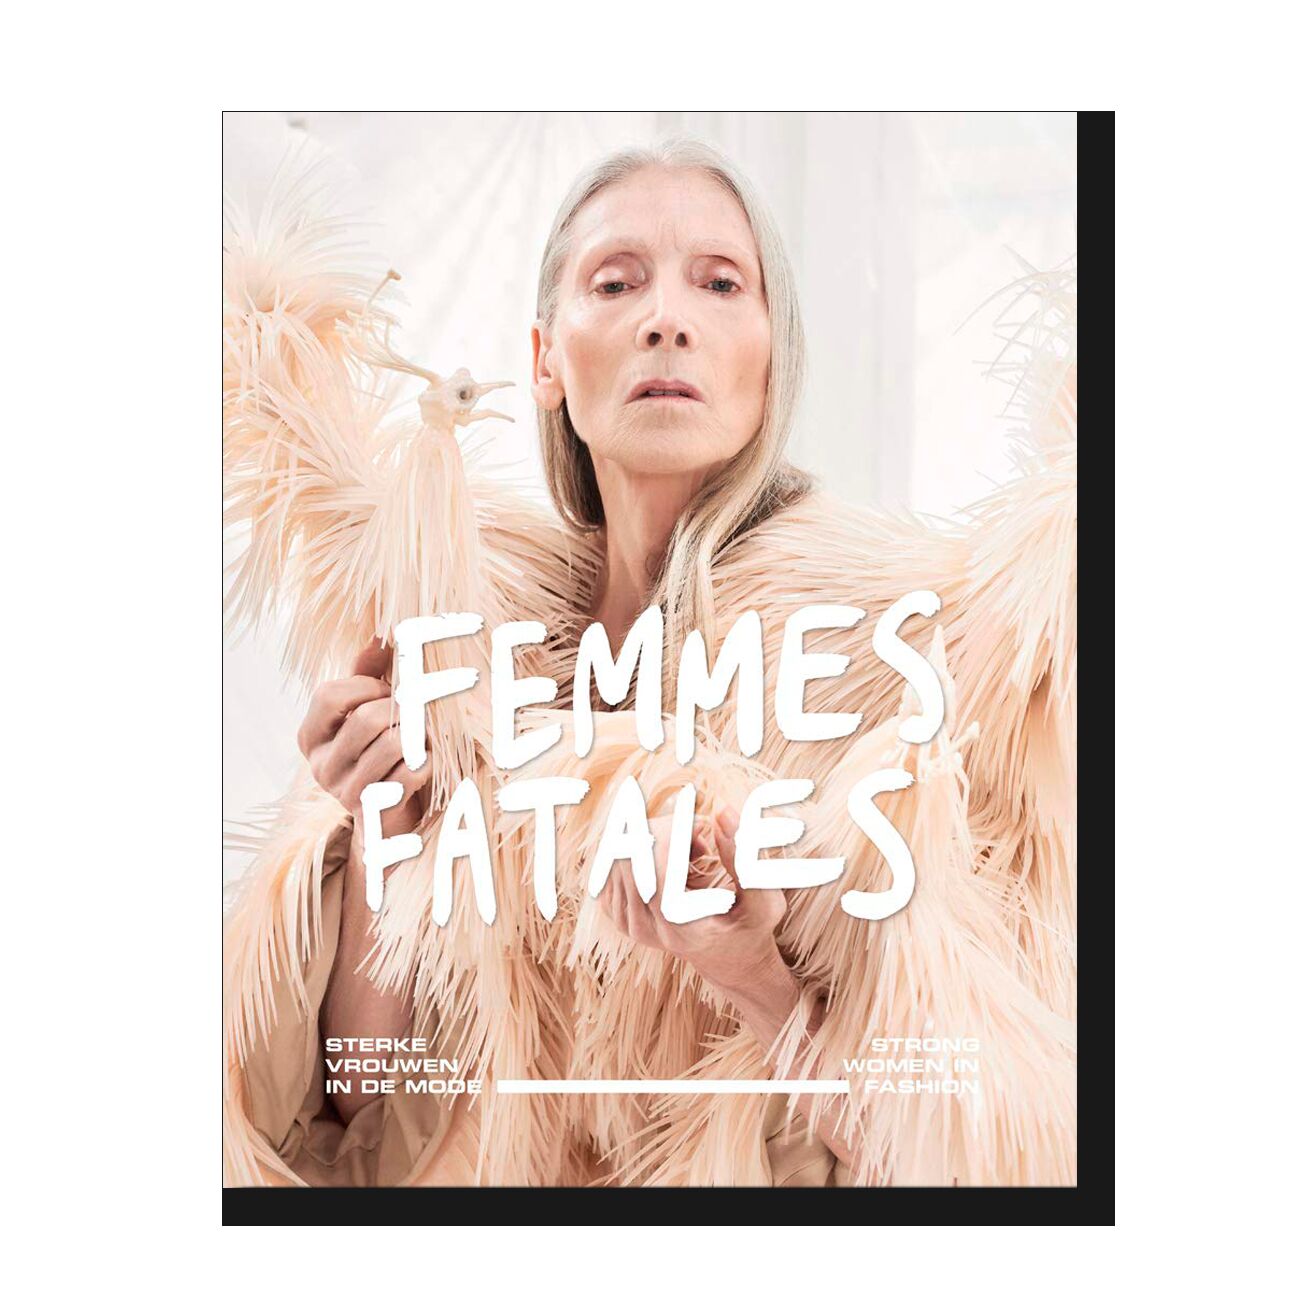 Femmes Fatales: Strong Women in Fashion